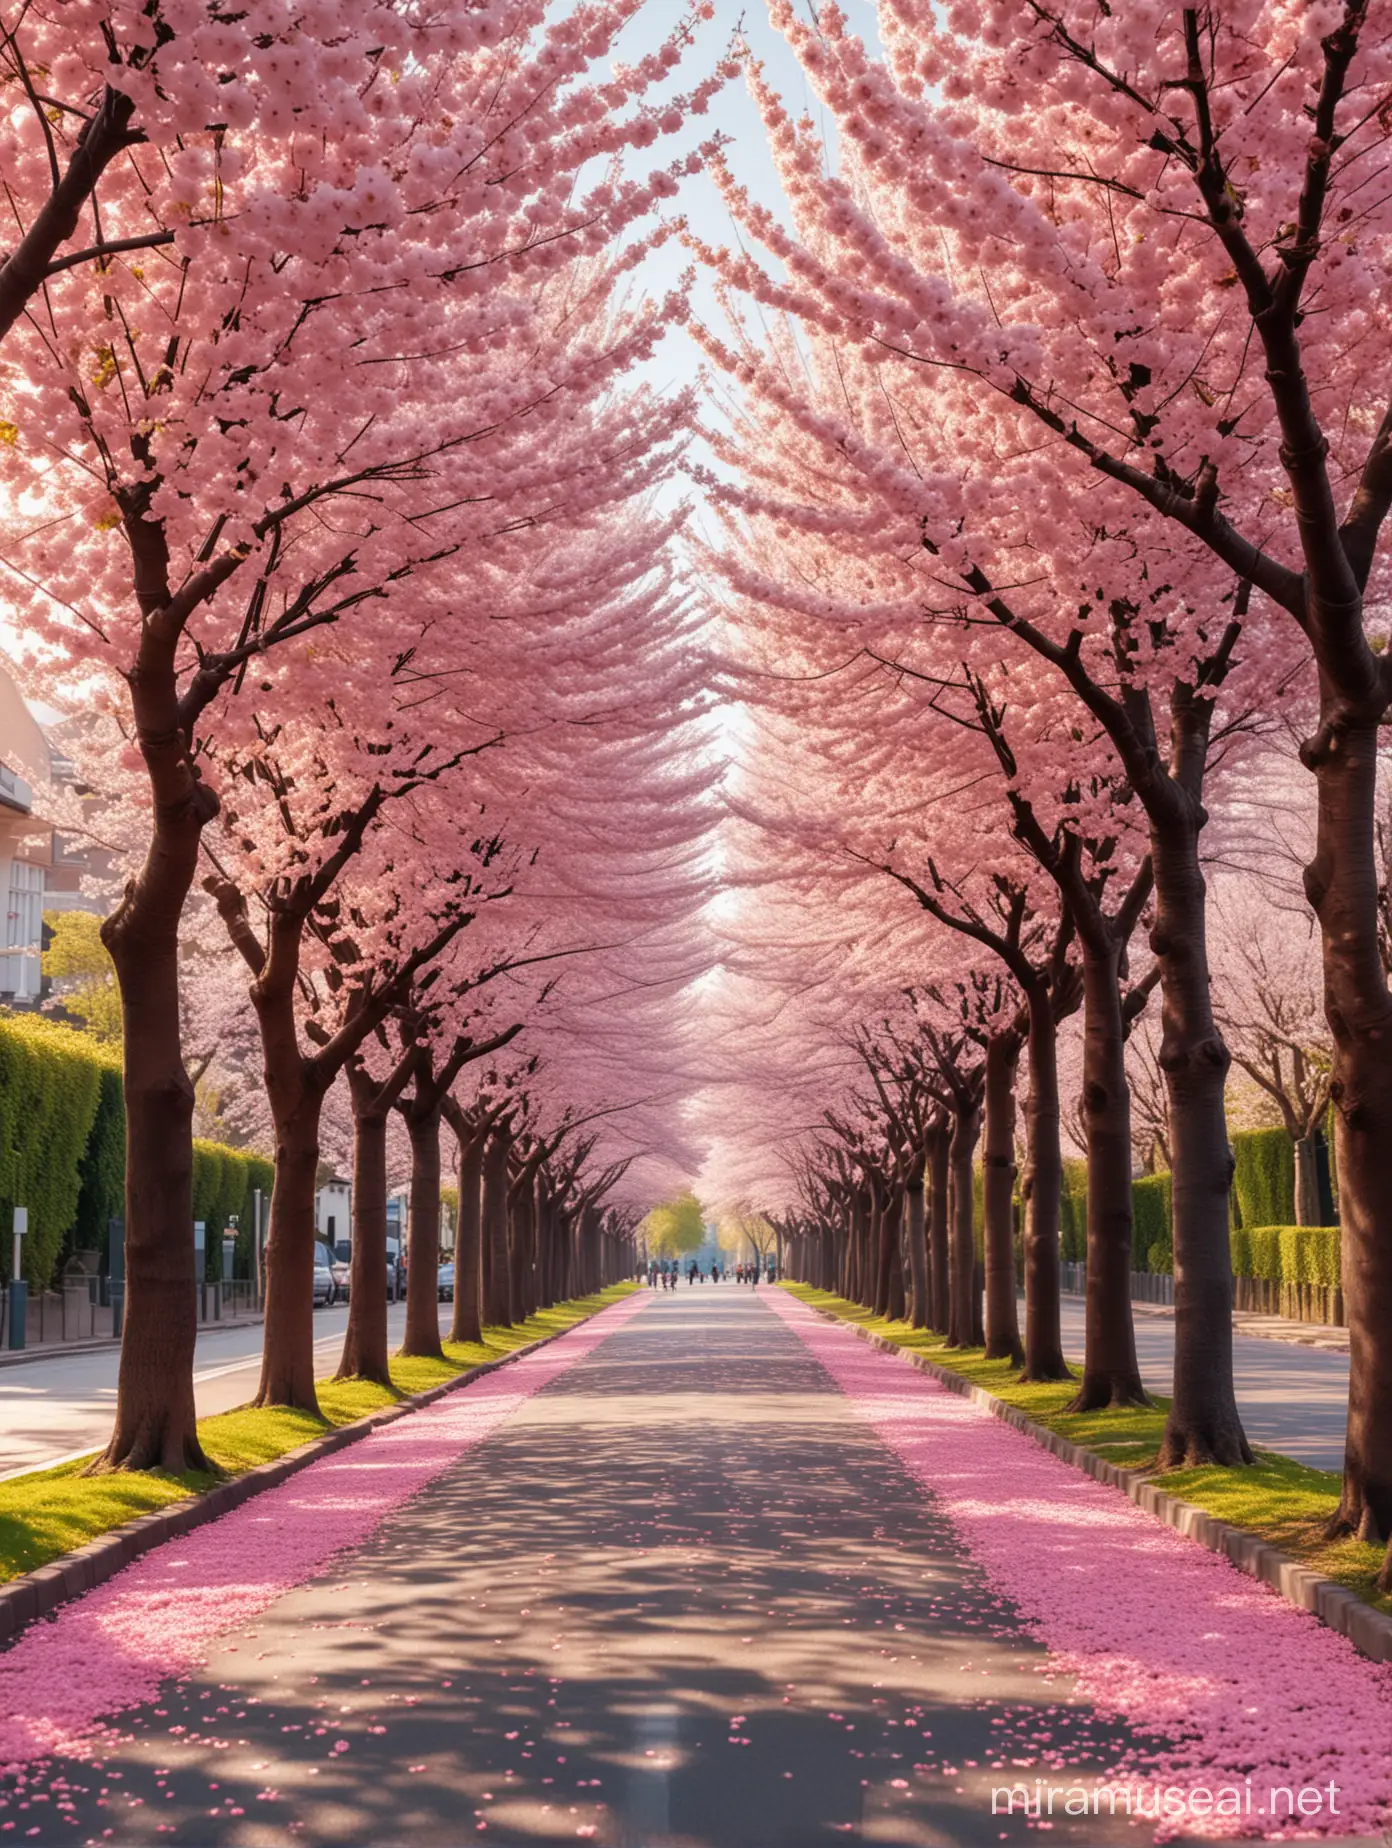 Enchanting Cherry BlossomLined Street in Full Bloom